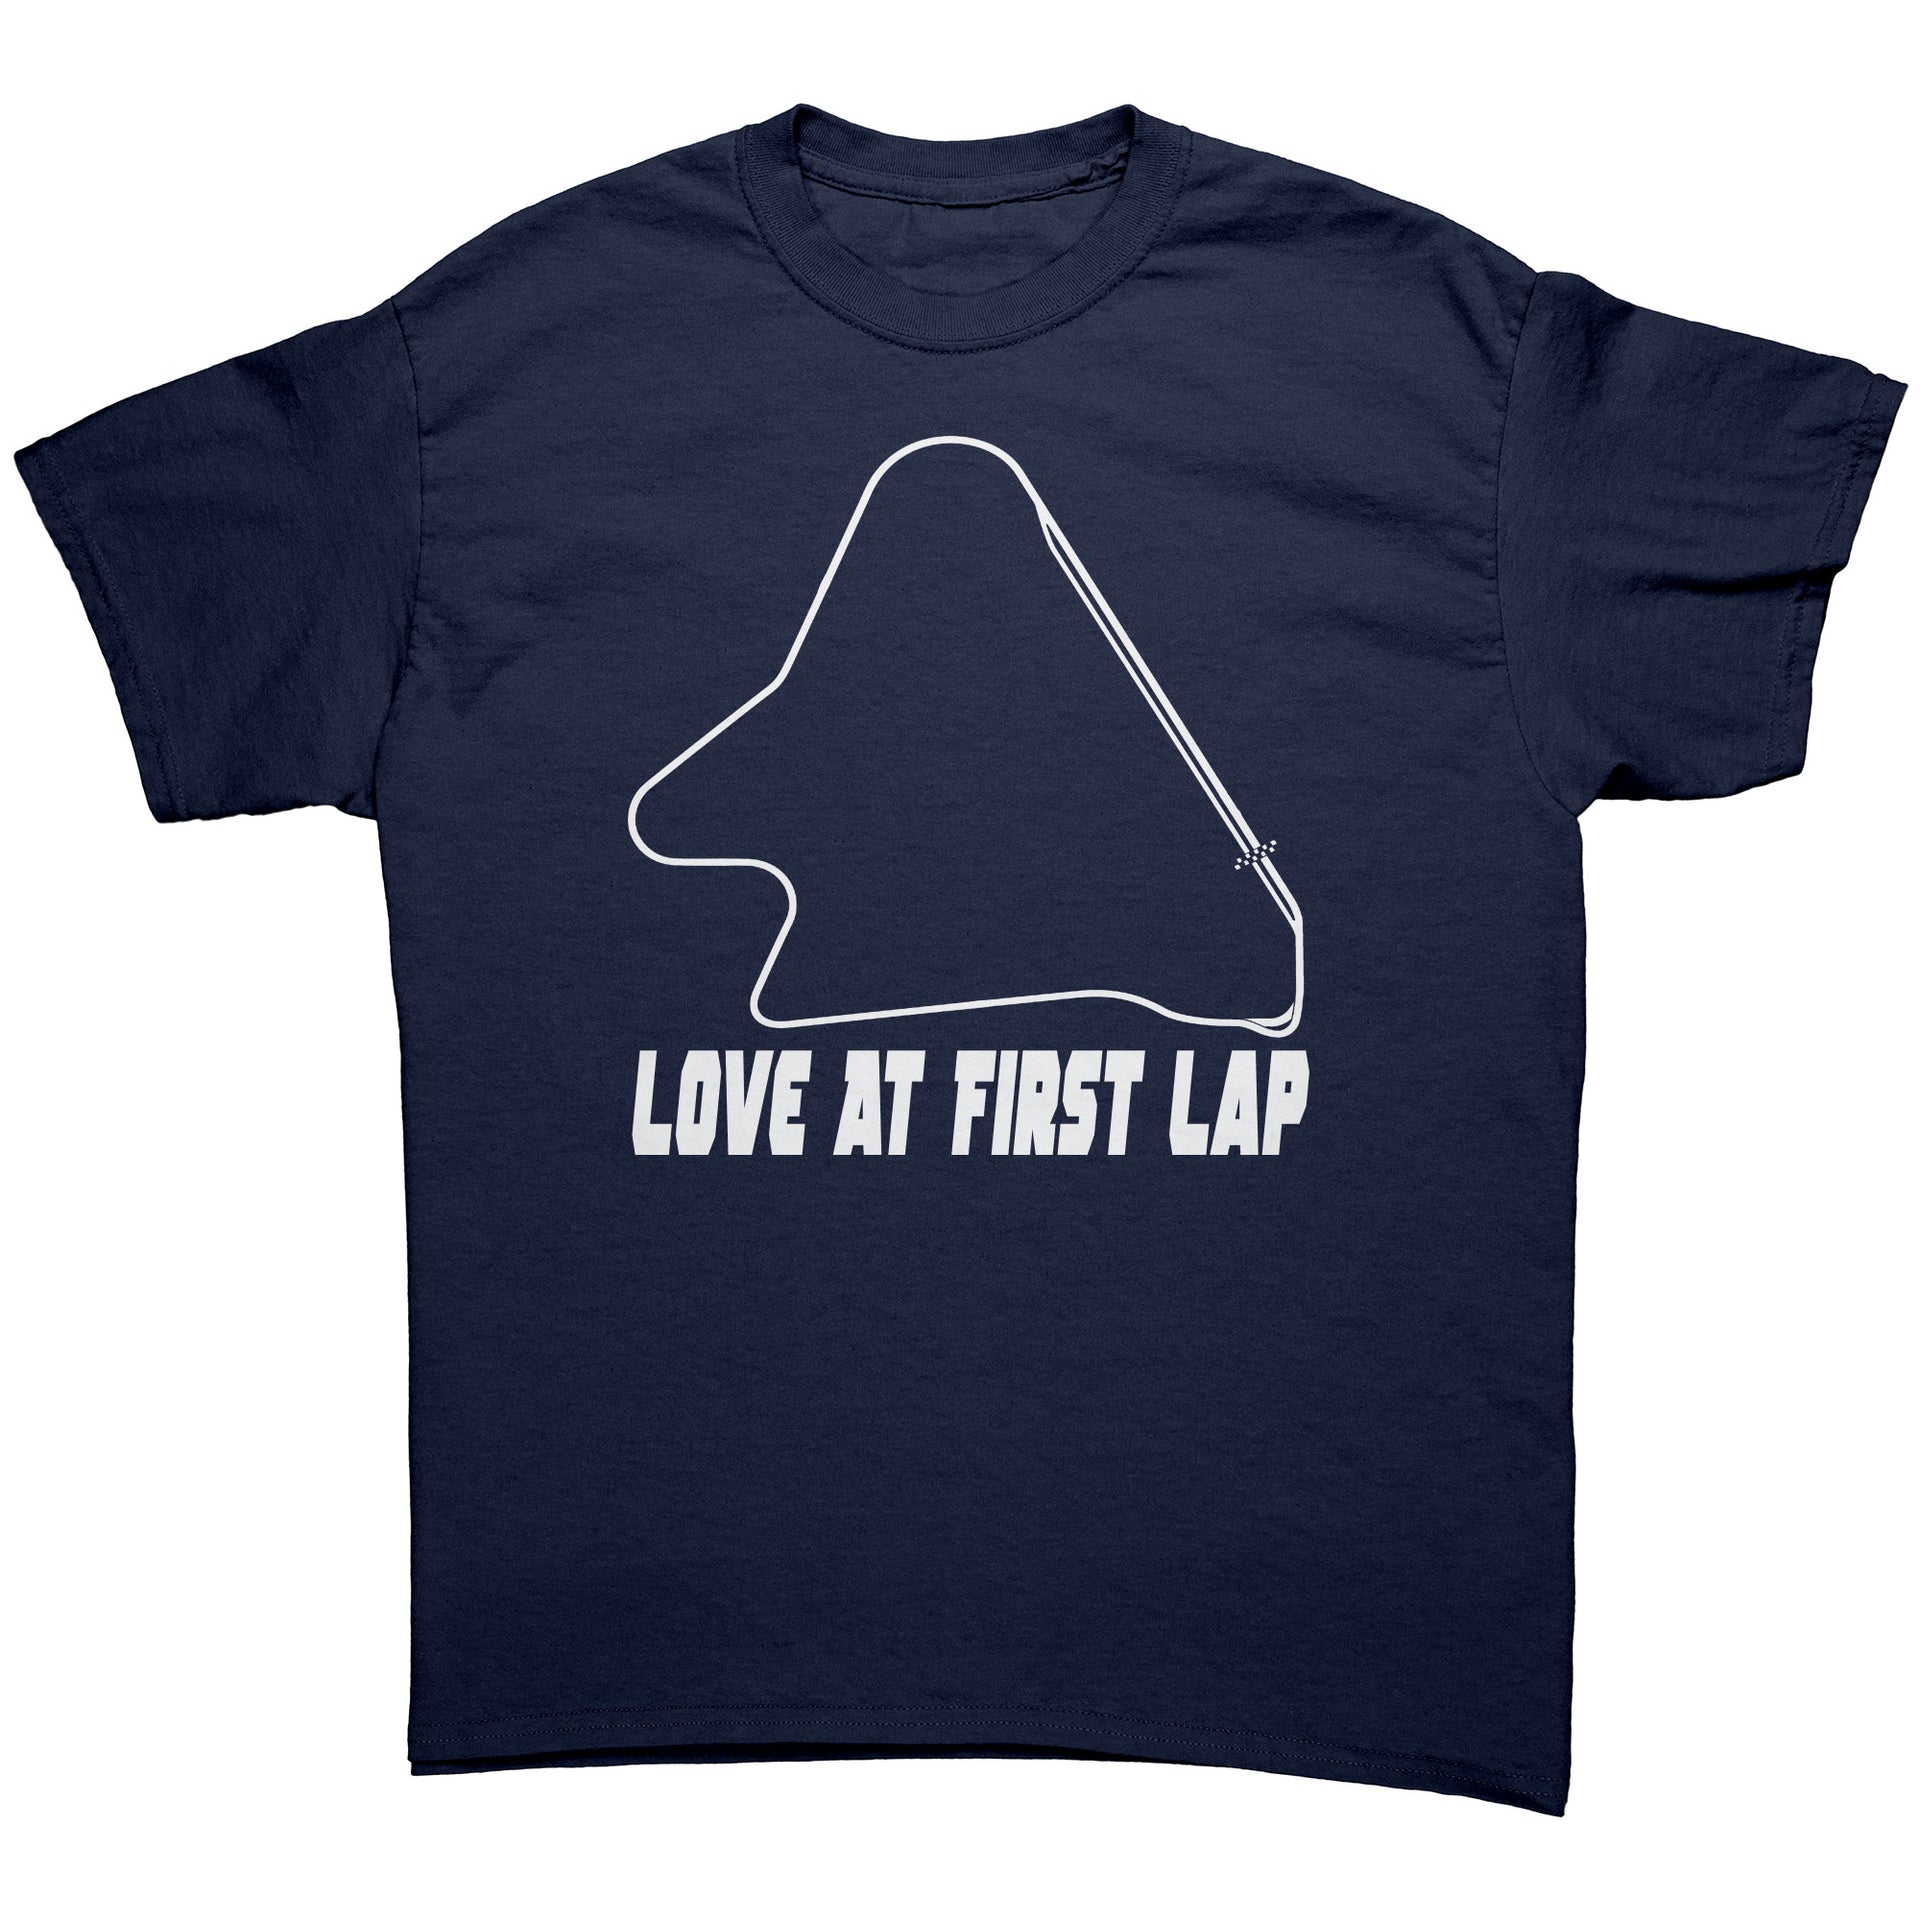 racing race track t-shirts